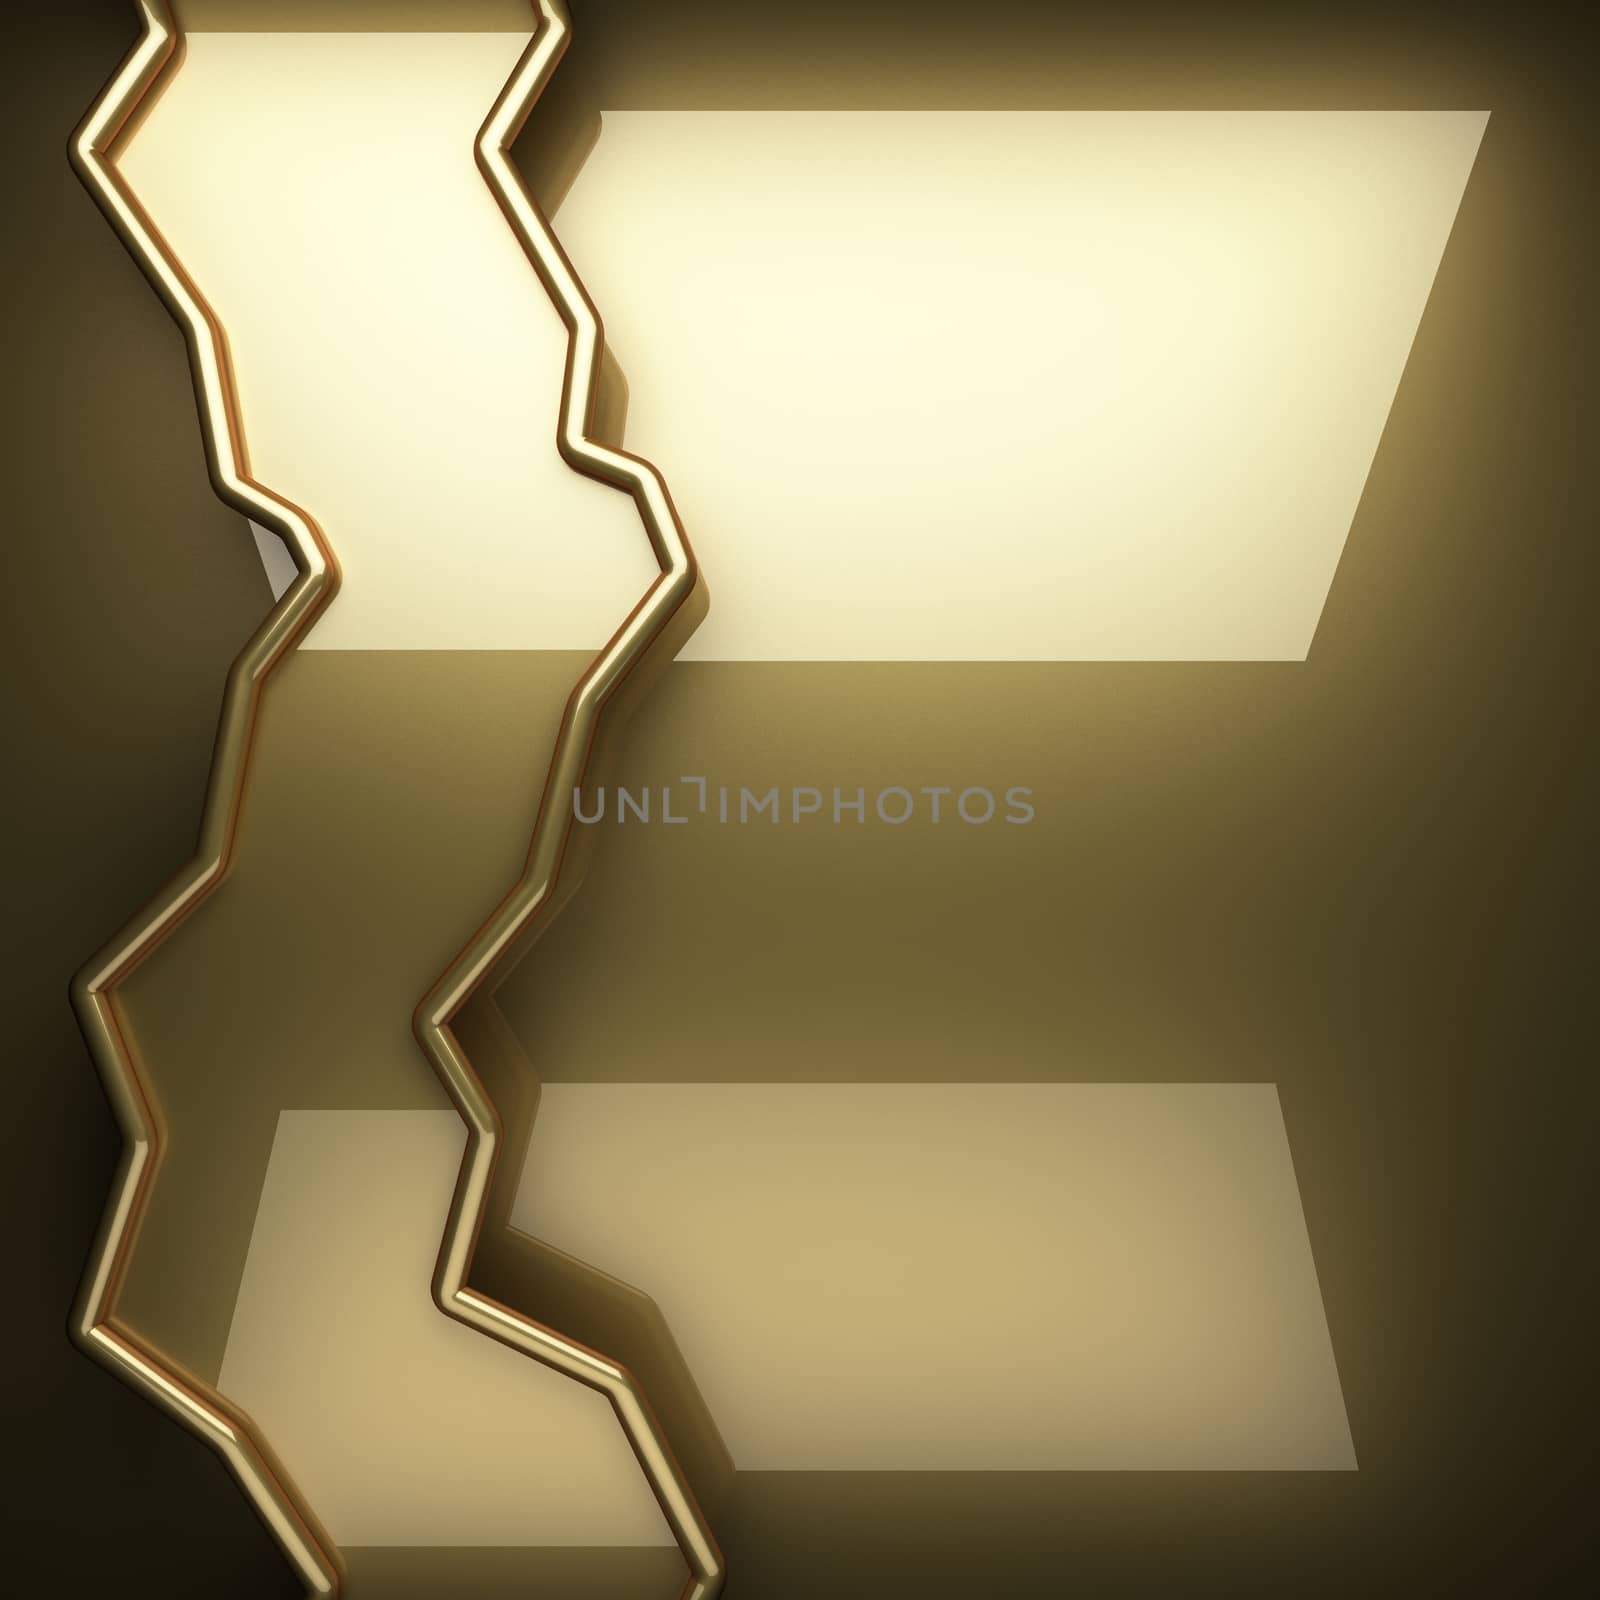 polished golden background by videodoctor